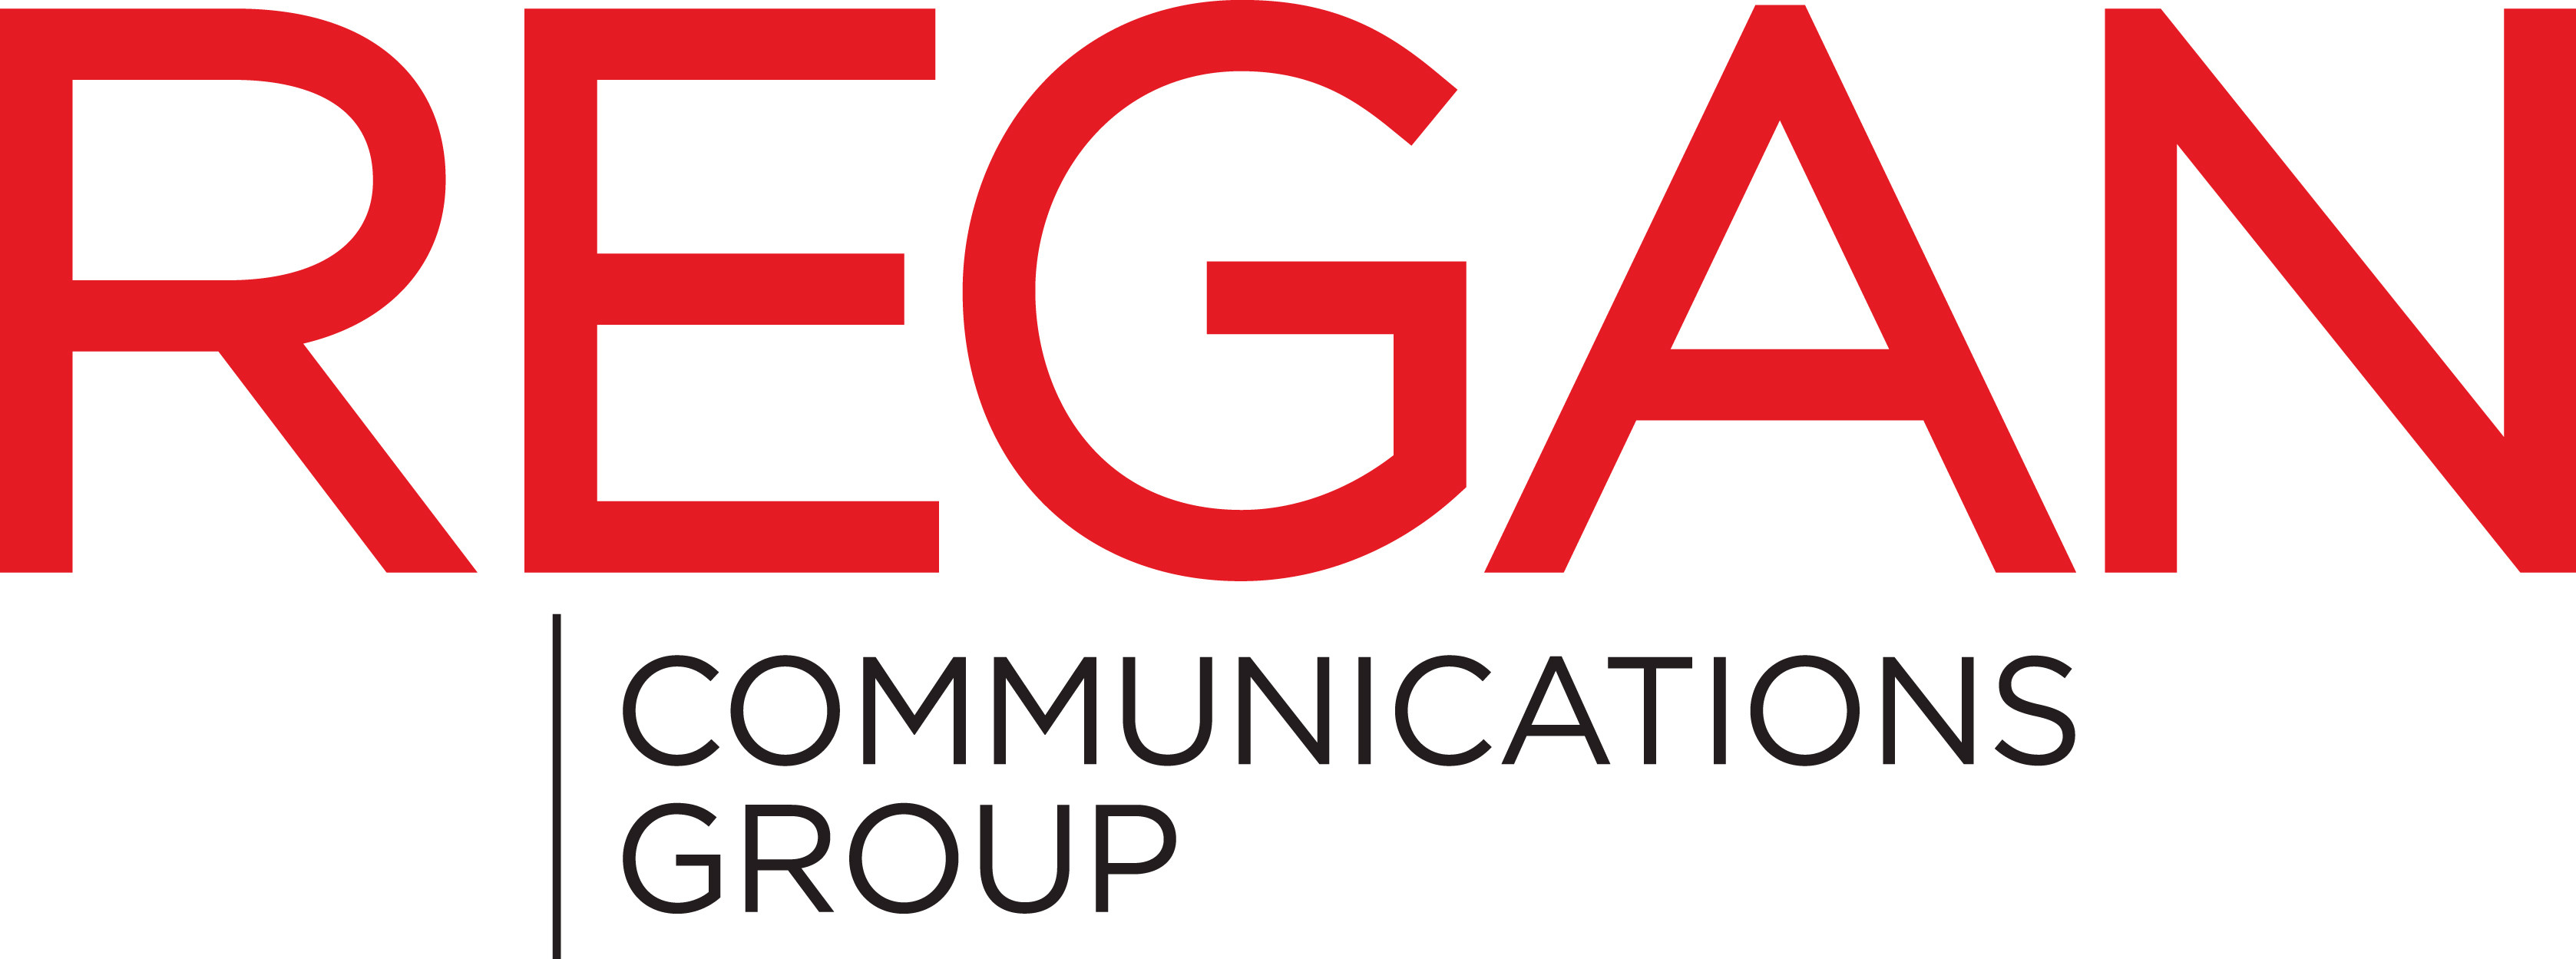  Leading Public Relations Business Logo: Regan Communications Group